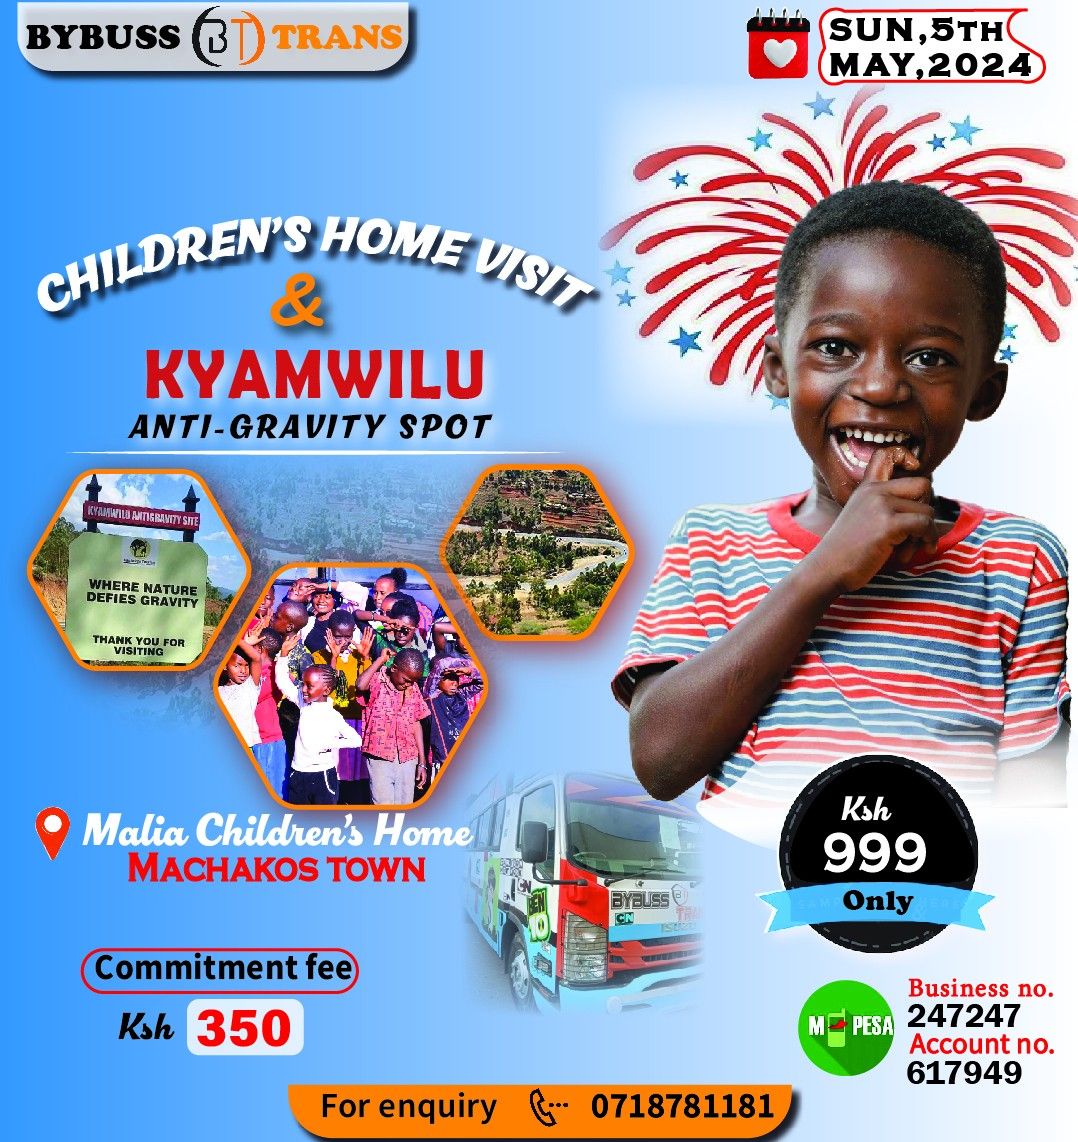 KWAMWILU'S ANTI-GRAVITY SPOT & Malia Children's Home Visit